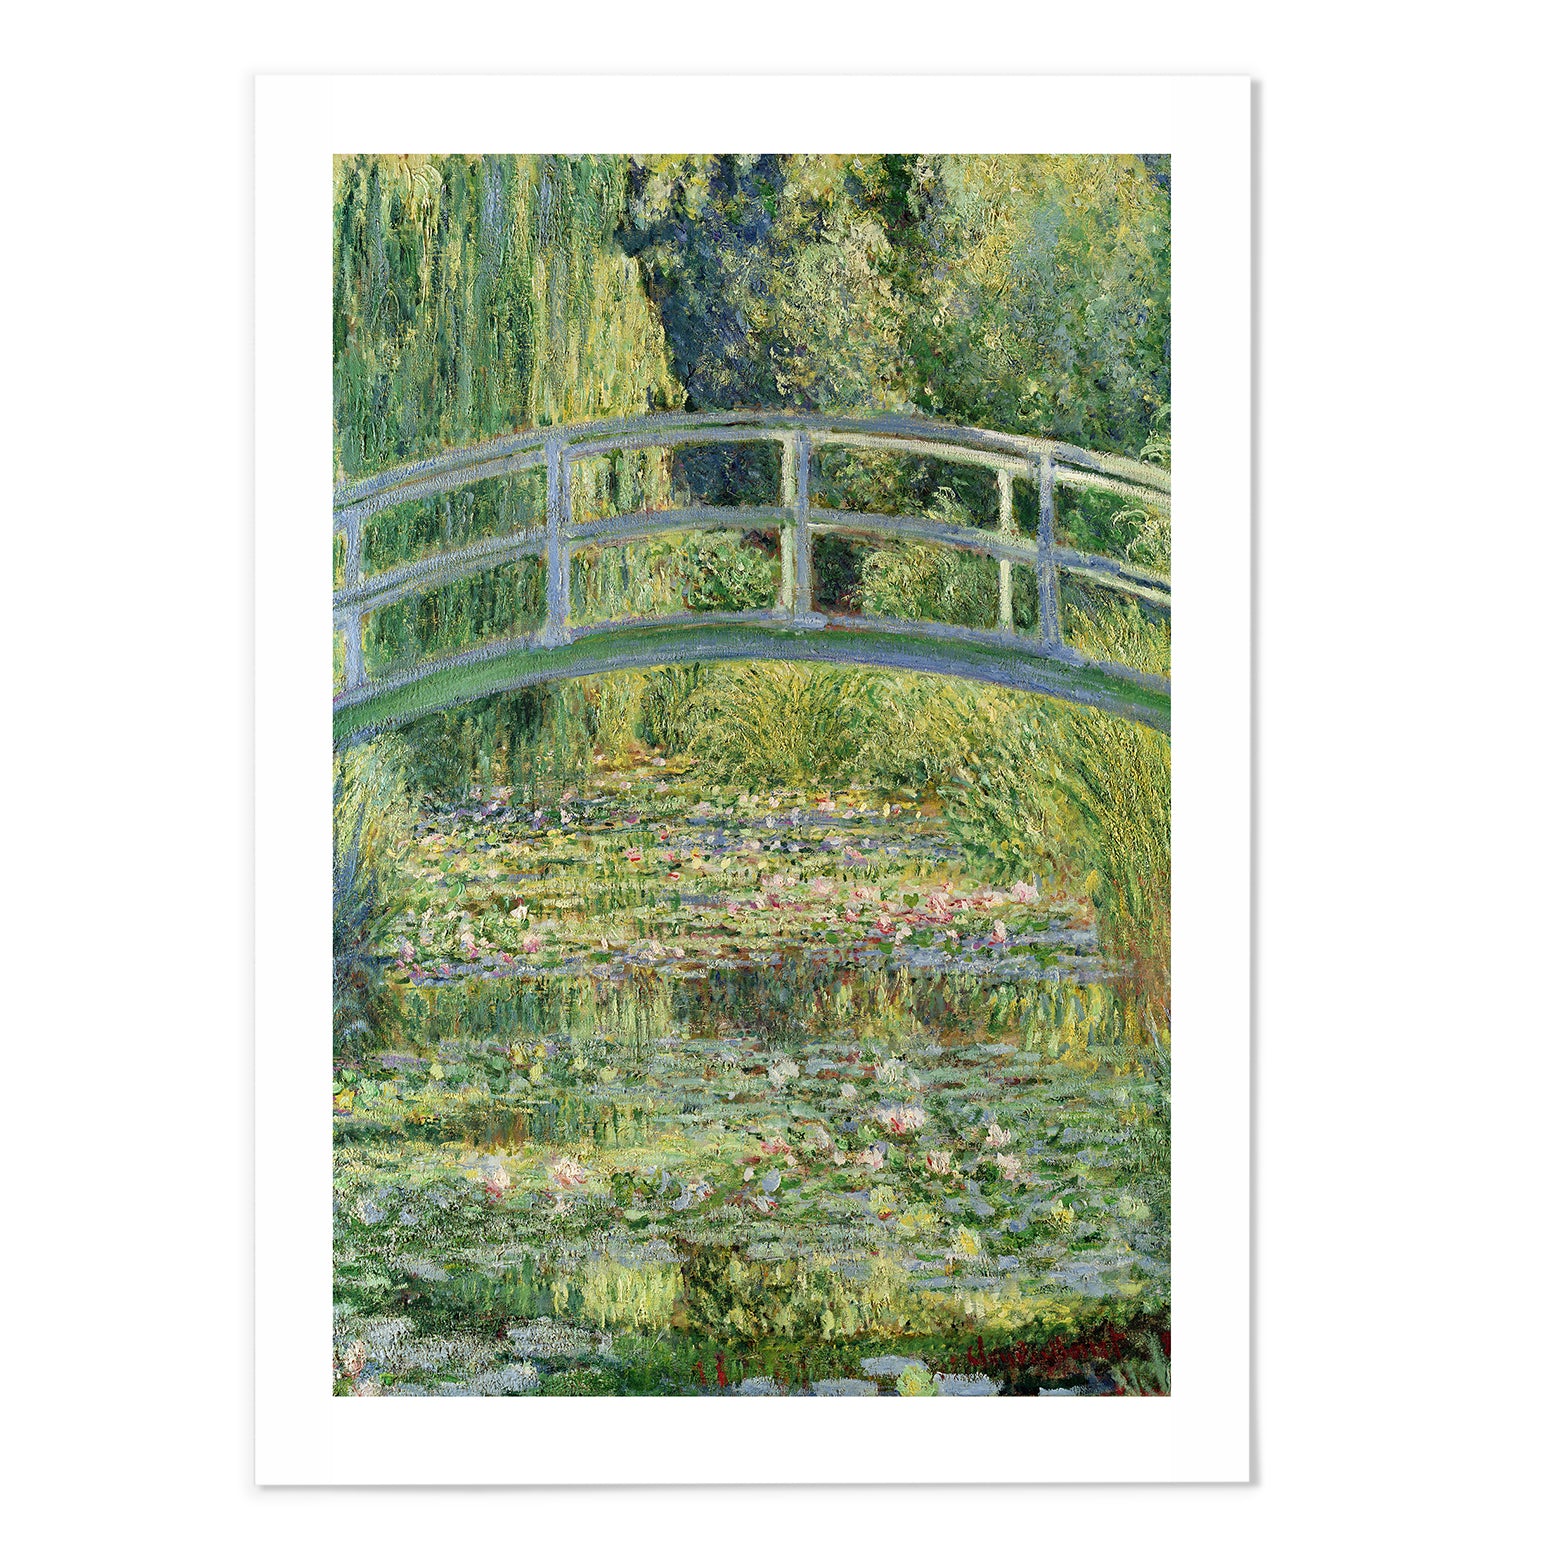 Monet The Water Lilly Pond Art Print - MJ Design Studio